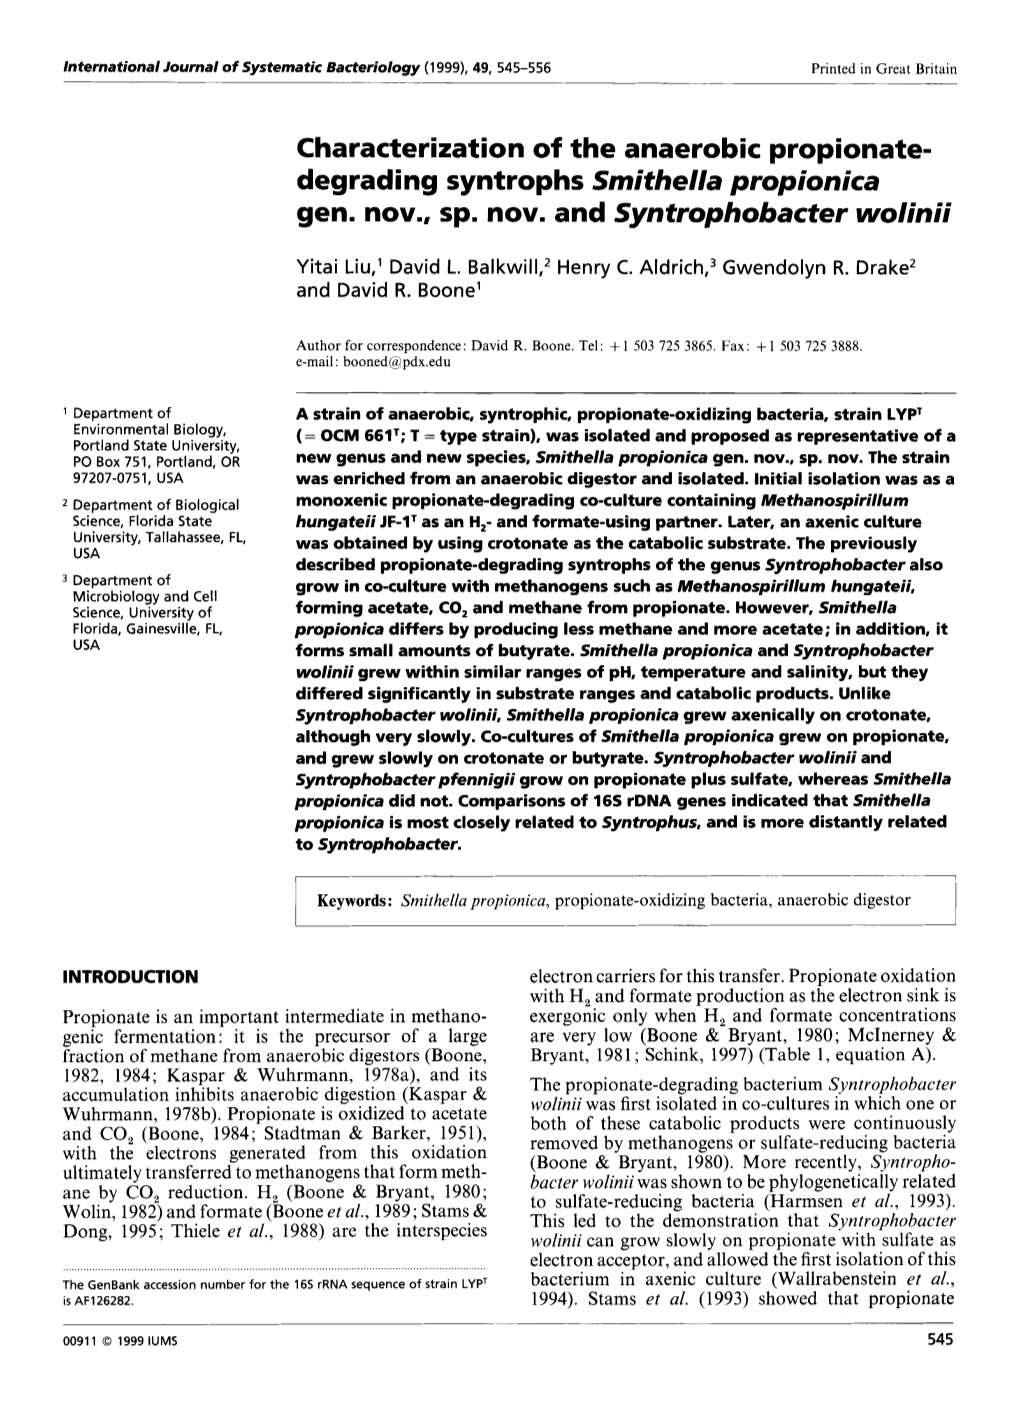 Degrading Syntrophs Smithella Propionica Gen. Nov., Sp. Nov. and Syntrophobacter Wolinii